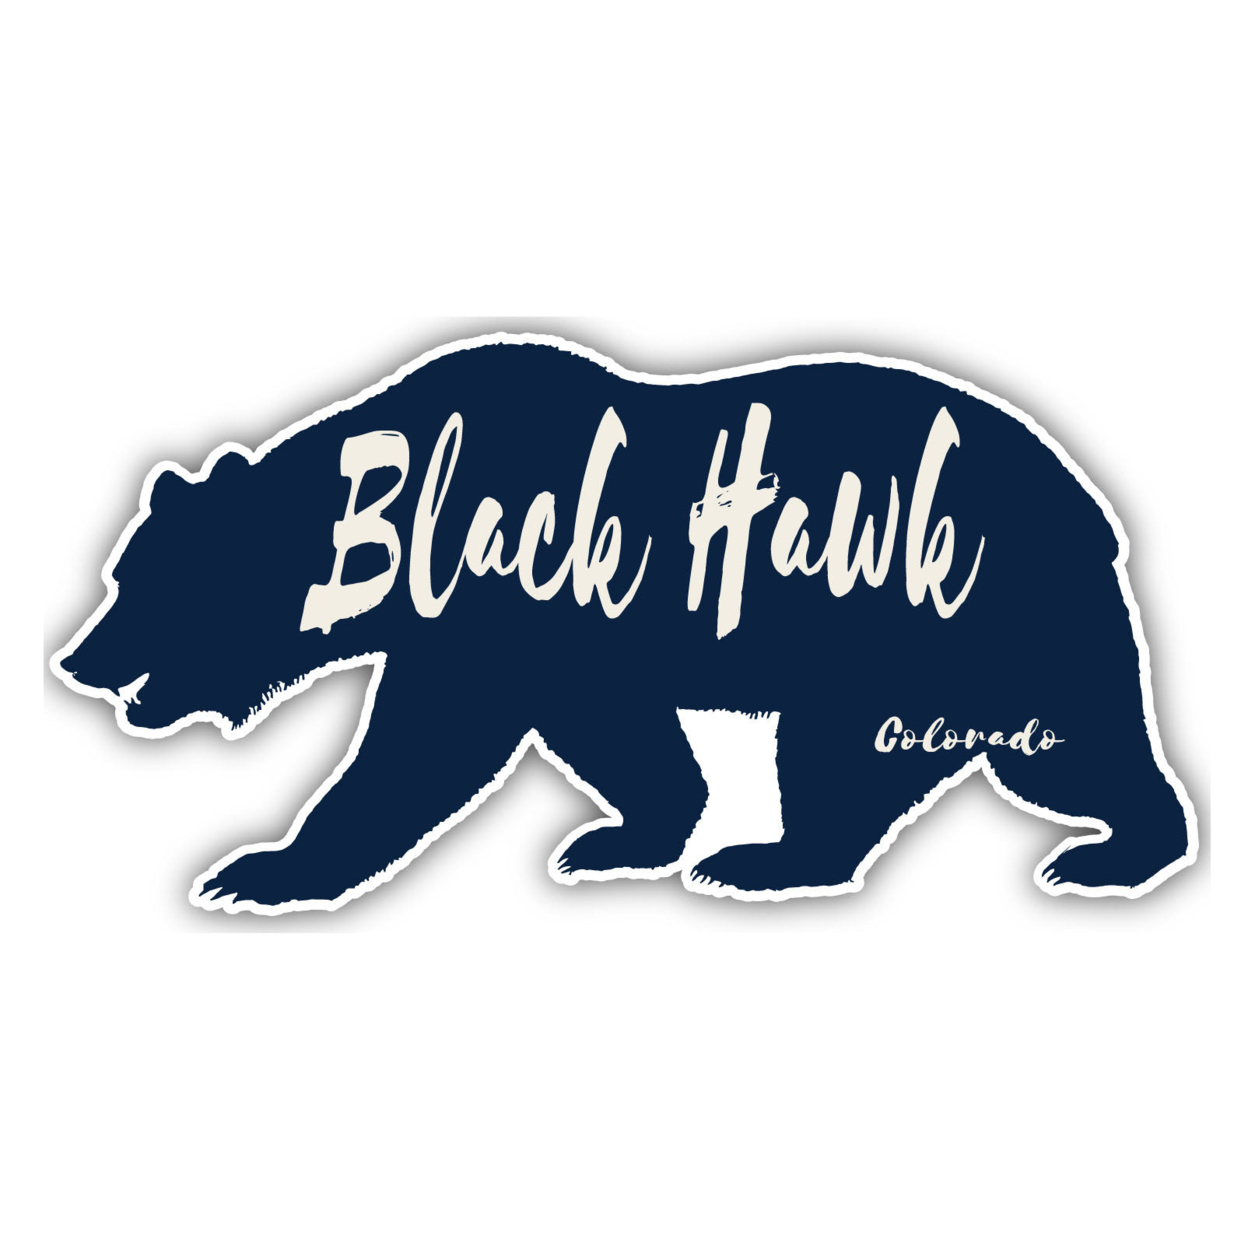 Black Hawk Colorado Souvenir Decorative Stickers (Choose Theme And Size) - 4-Pack, 4-Inch, Adventures Awaits